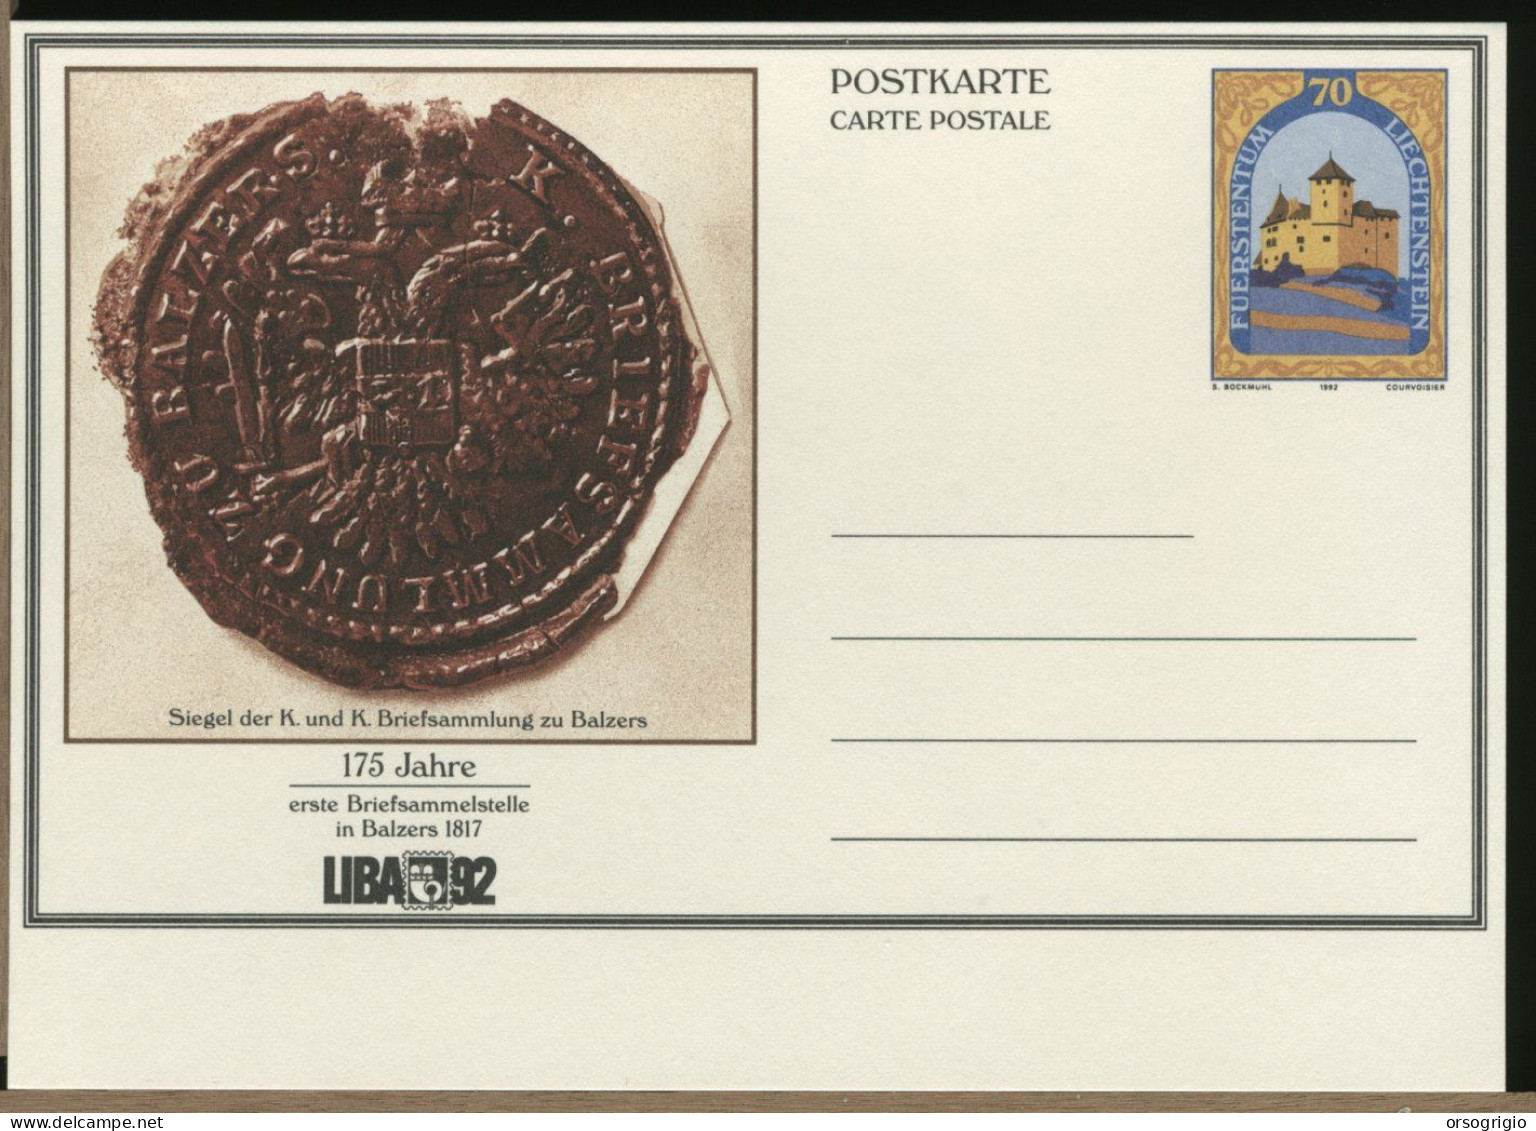 LIECHTENSTEIN - Cartolina Intero Postale - POSTKARTE - BALZERS - LIBA 1992 - Interi Postali